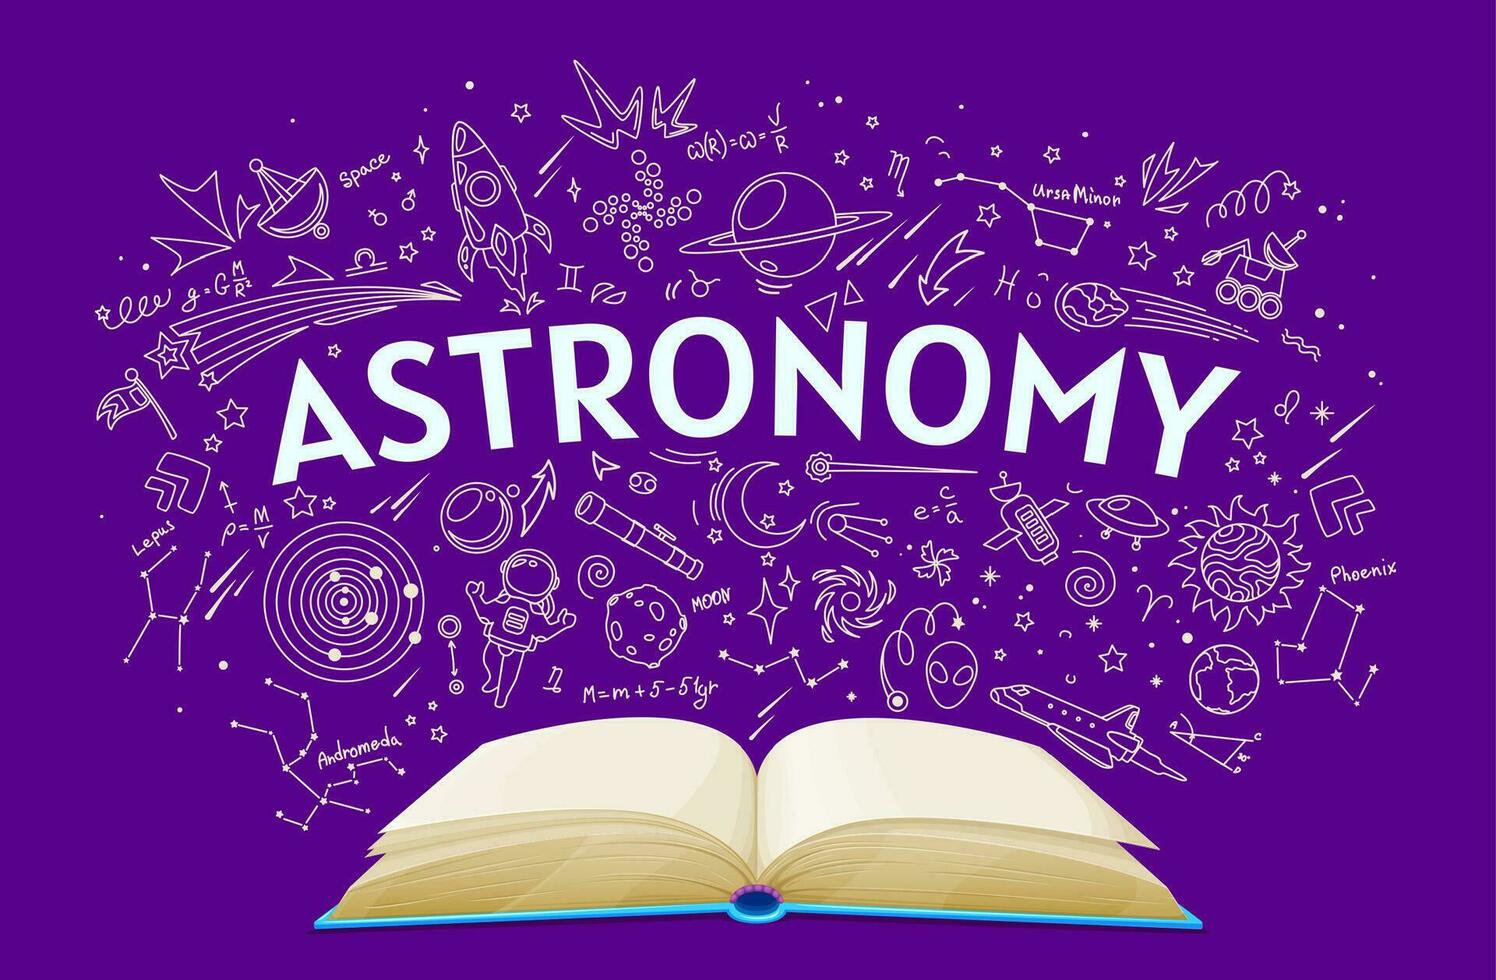 Astronomy textbook on school chalkboard background vector